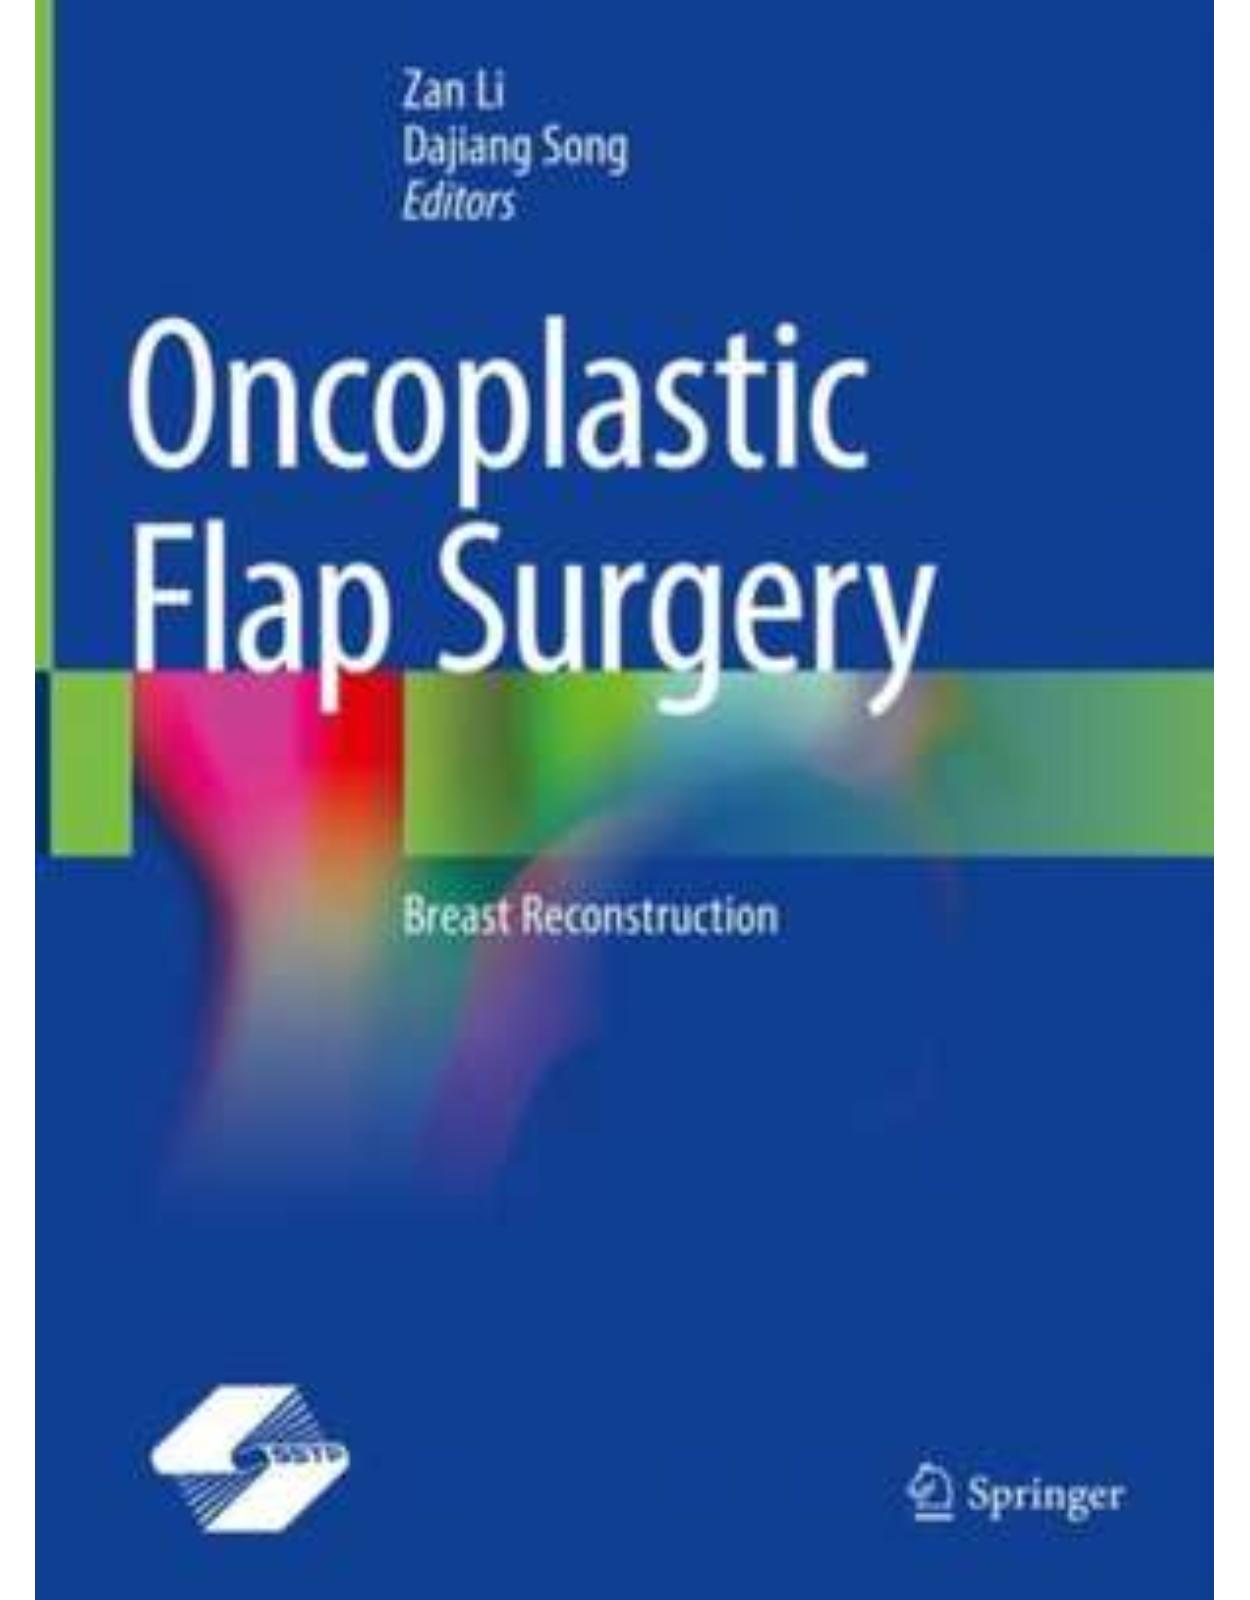 Oncoplastic Flap Surgery: Breast Reconstruction